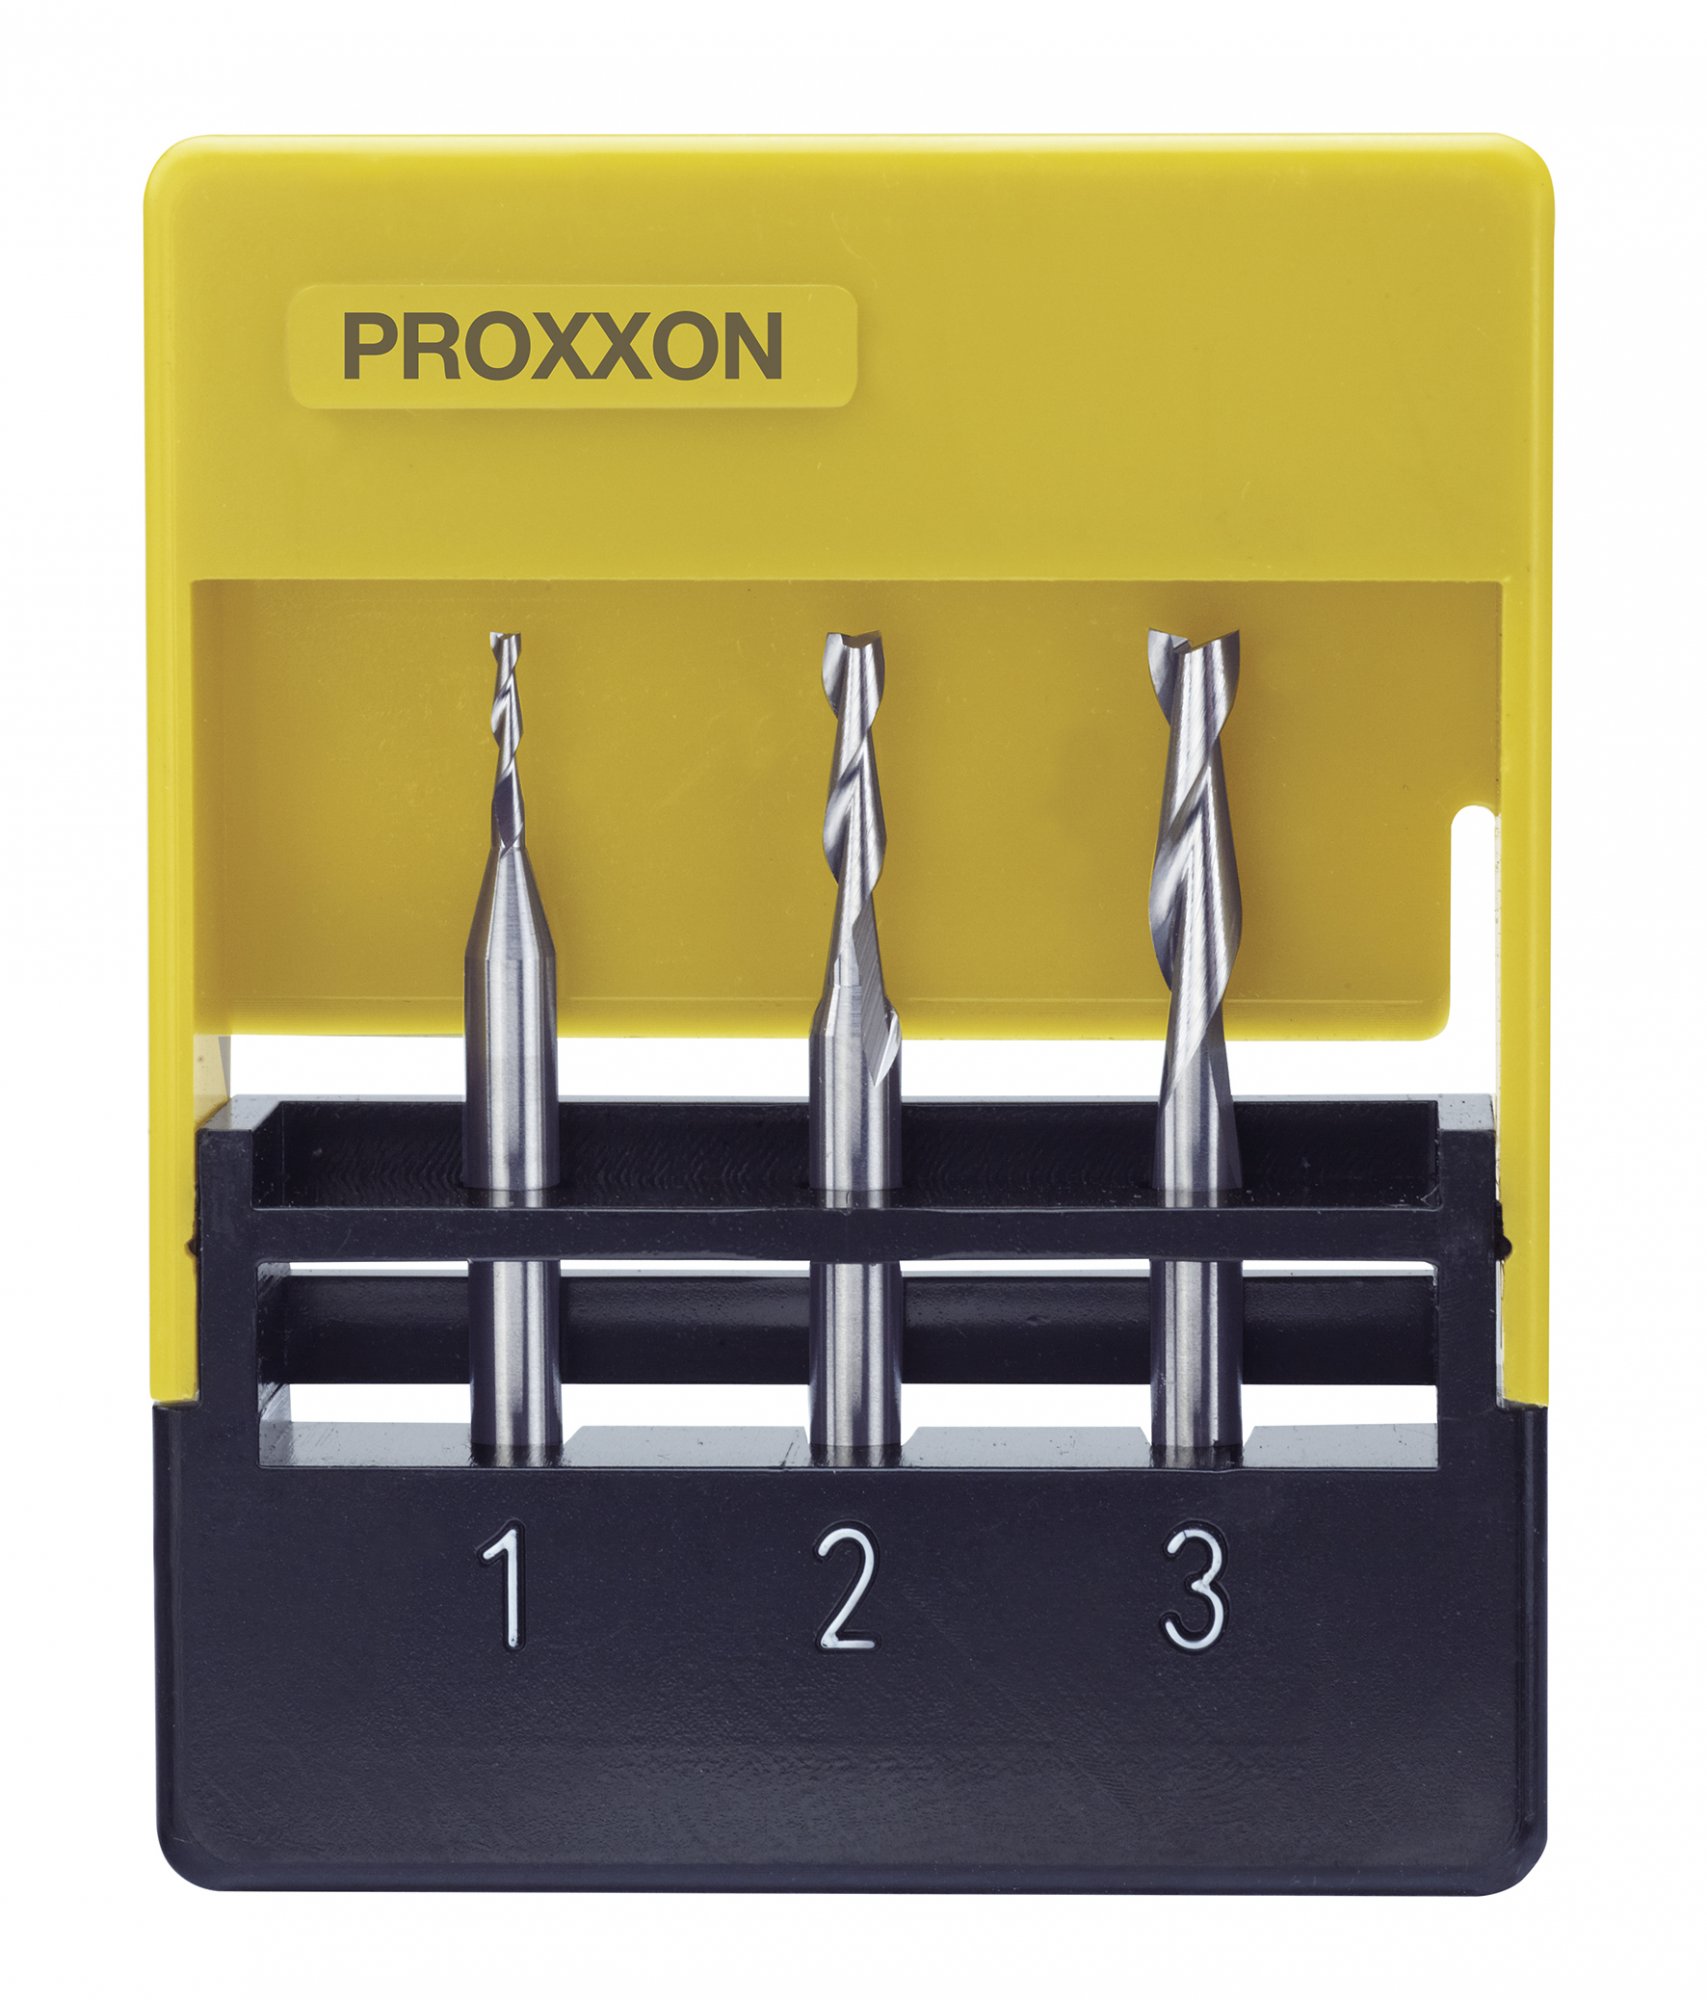 Proxxon Hardmetalen schachtfreesset 3-dlg. (1-2-3 mm)